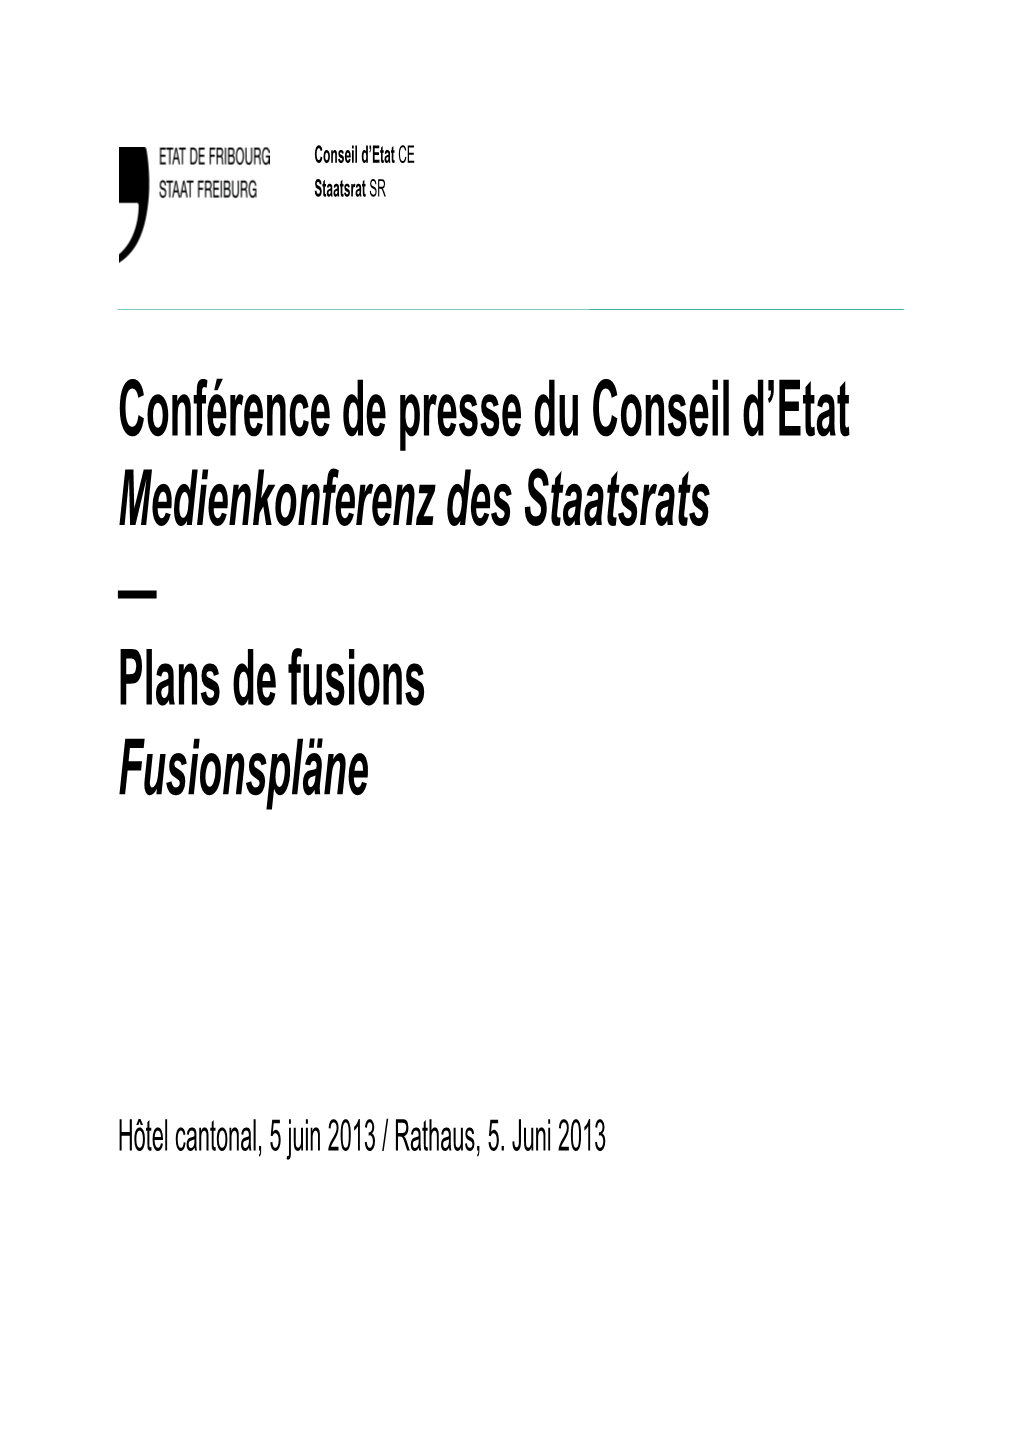 Conférence De Presse / Medienkonferenz 05.06.2013